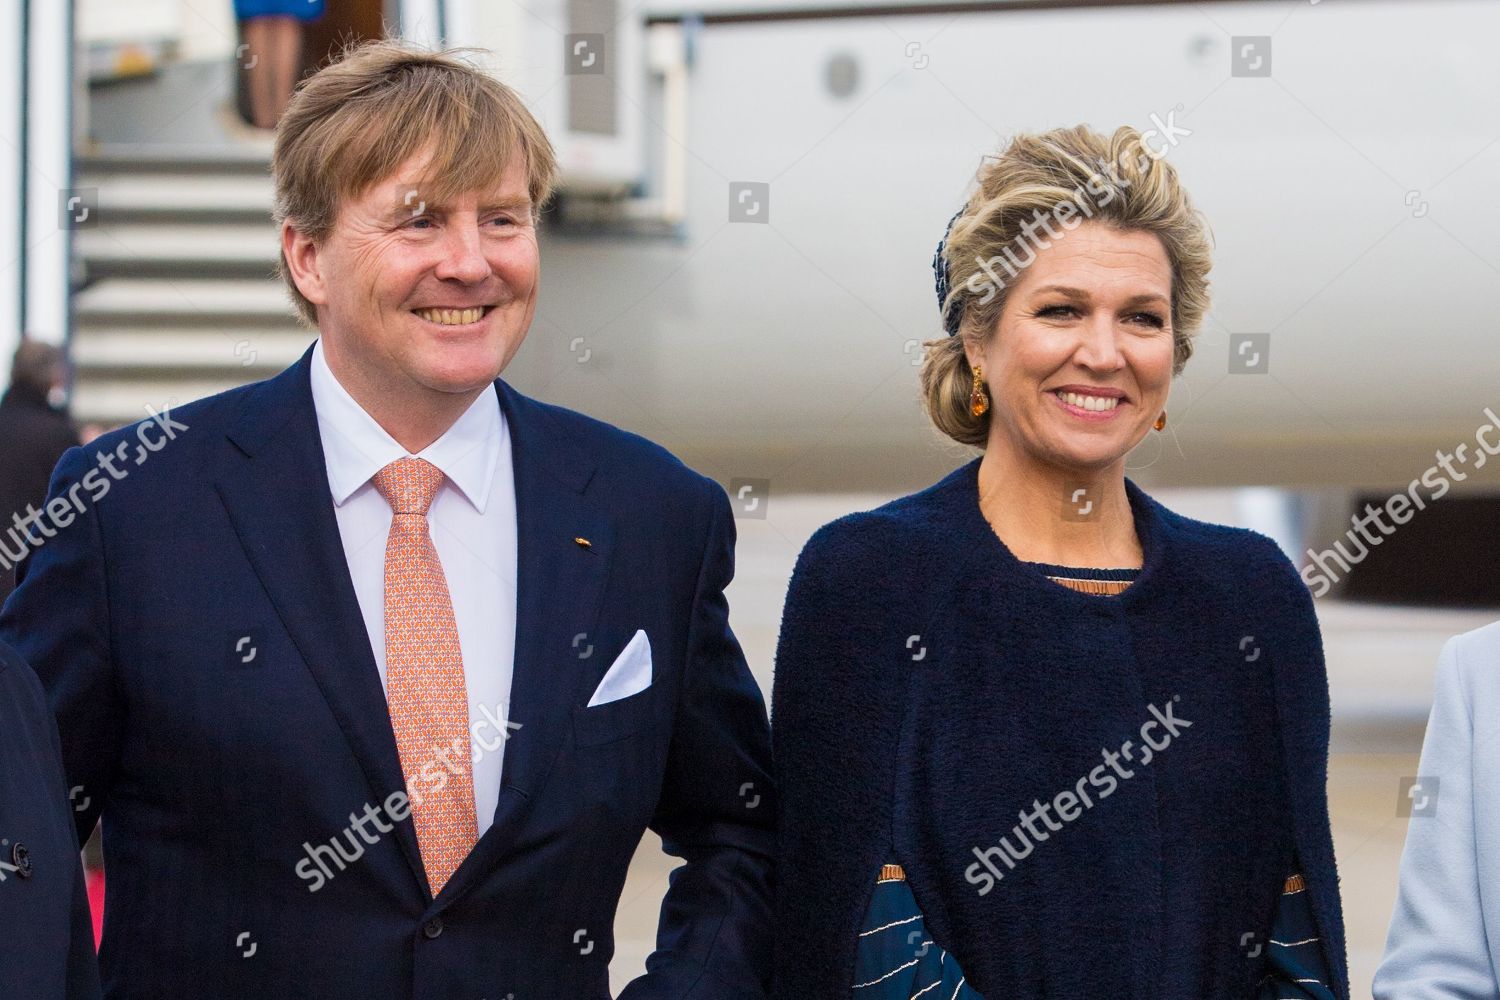 dutch-royals-visit-to-bremen-germany-shutterstock-editorial-10143597m.jpg